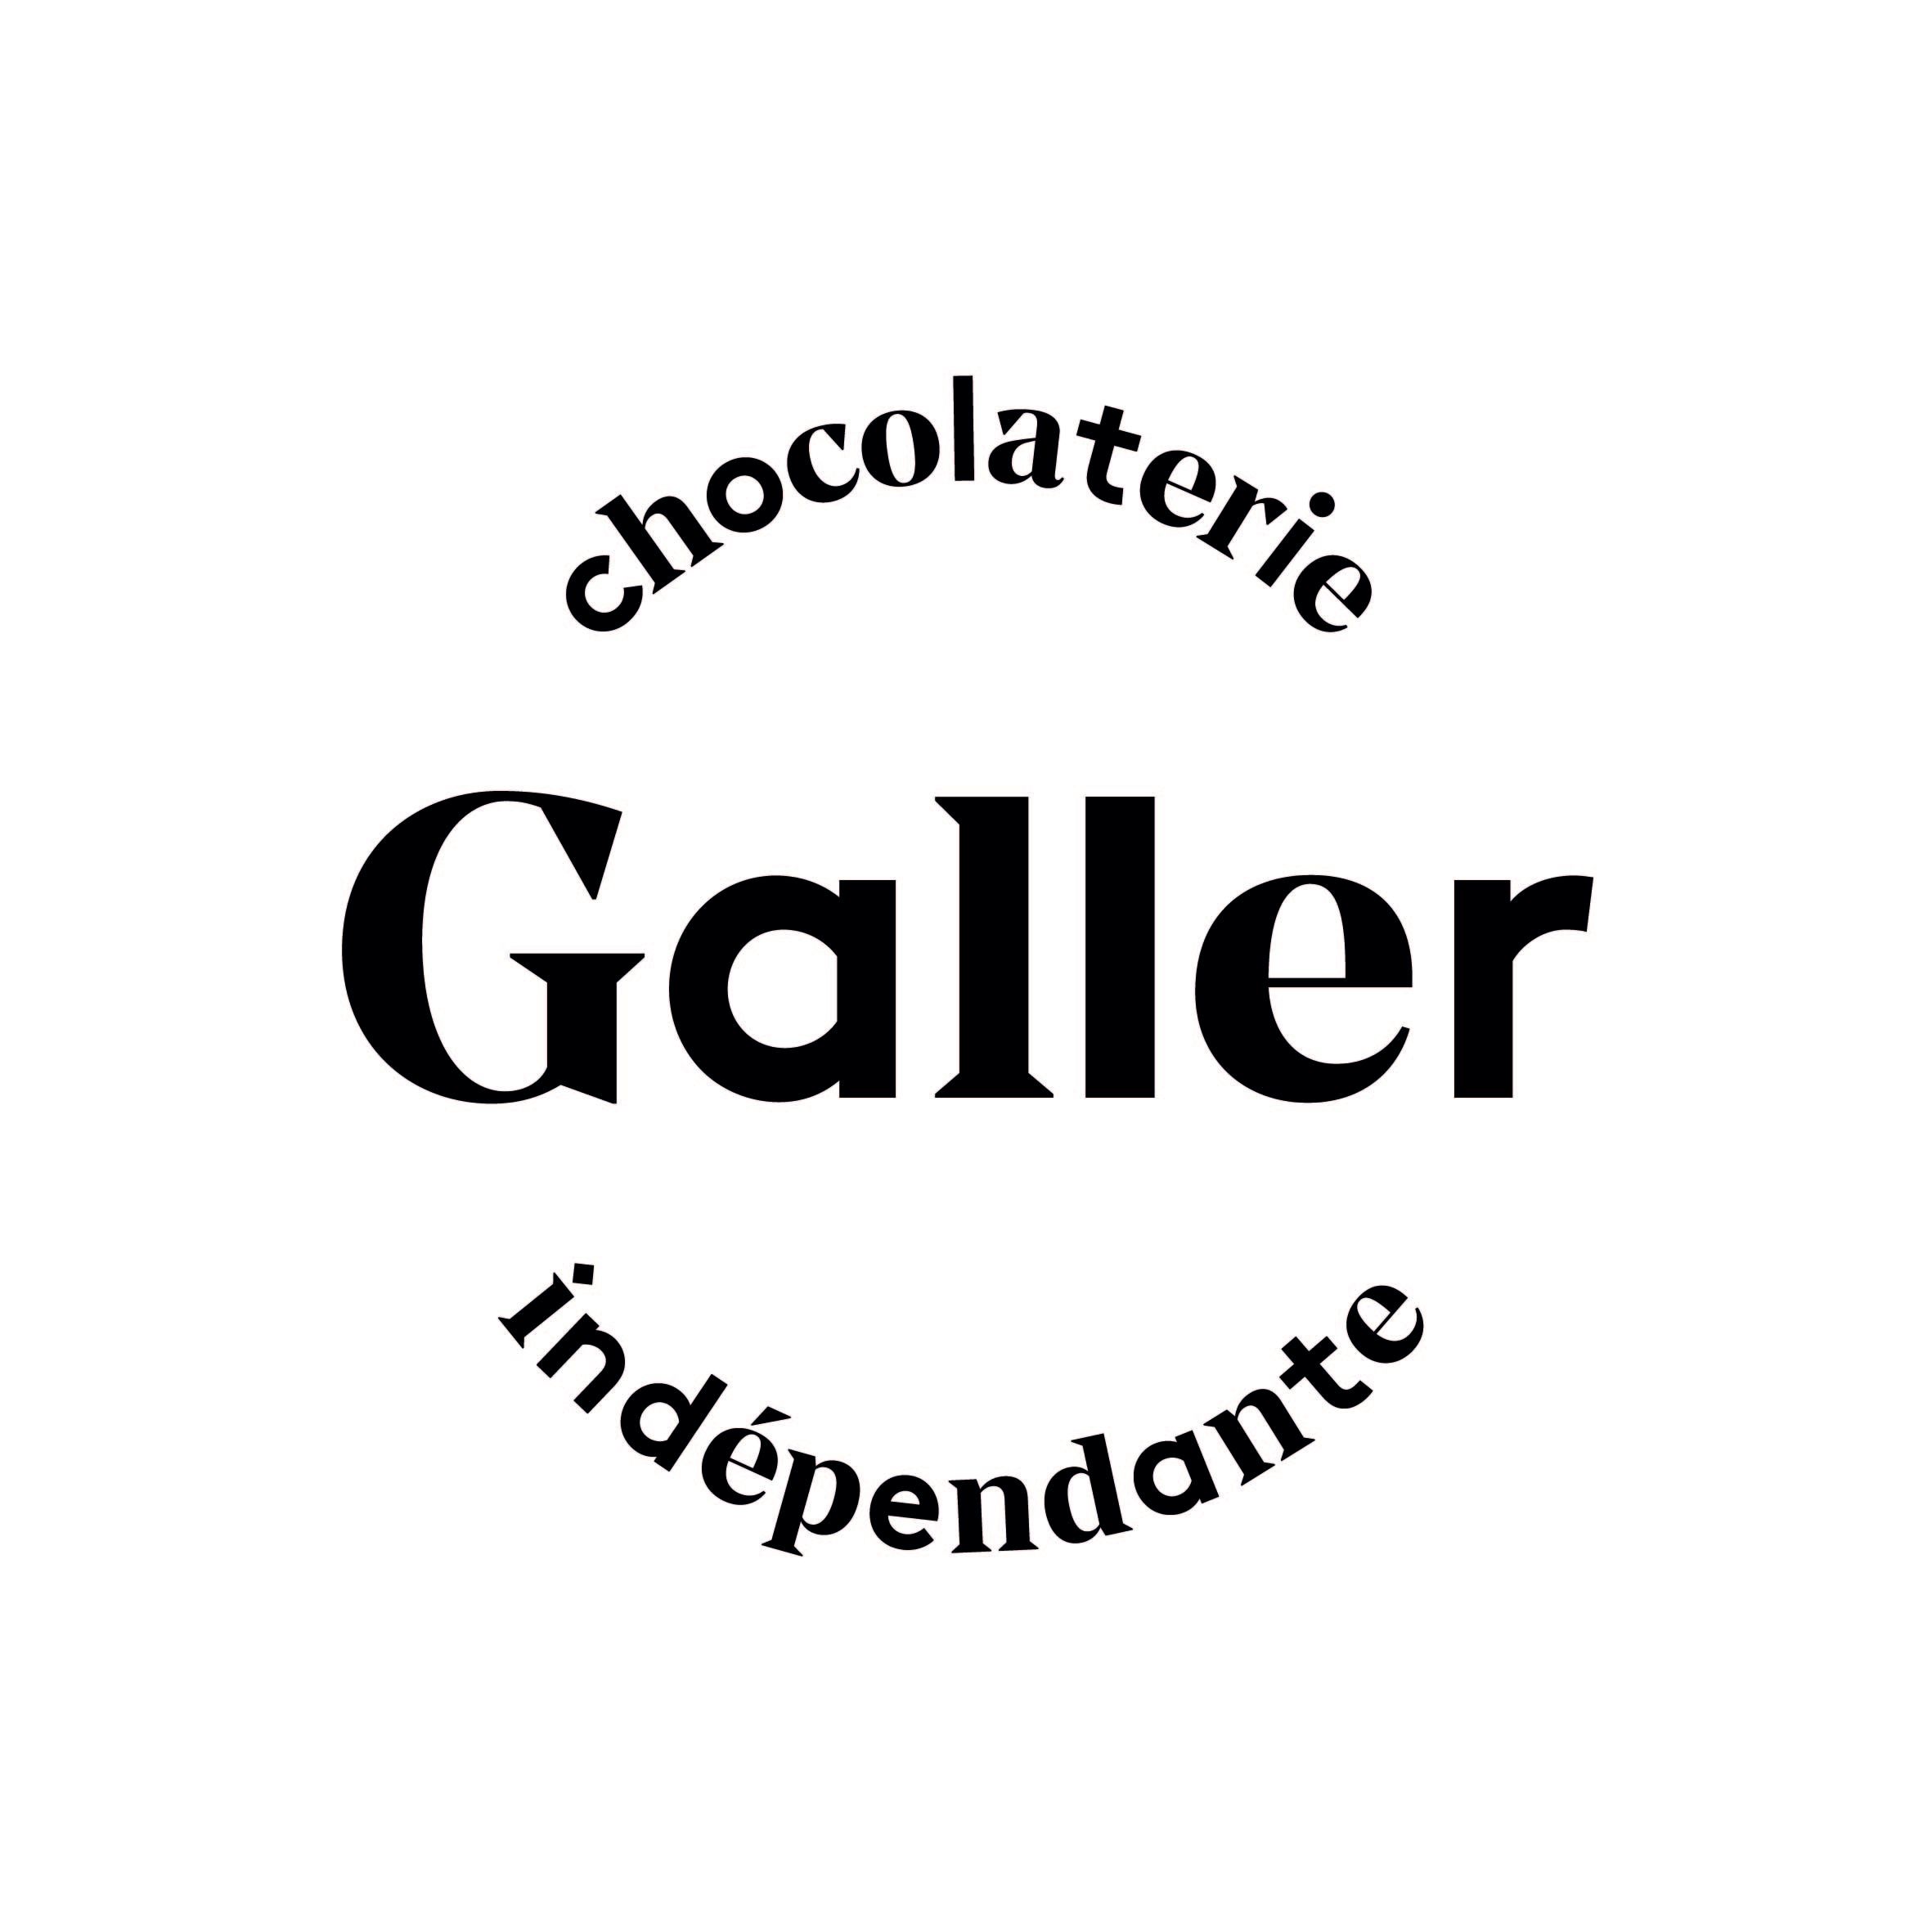 La Chocolaterie Galler